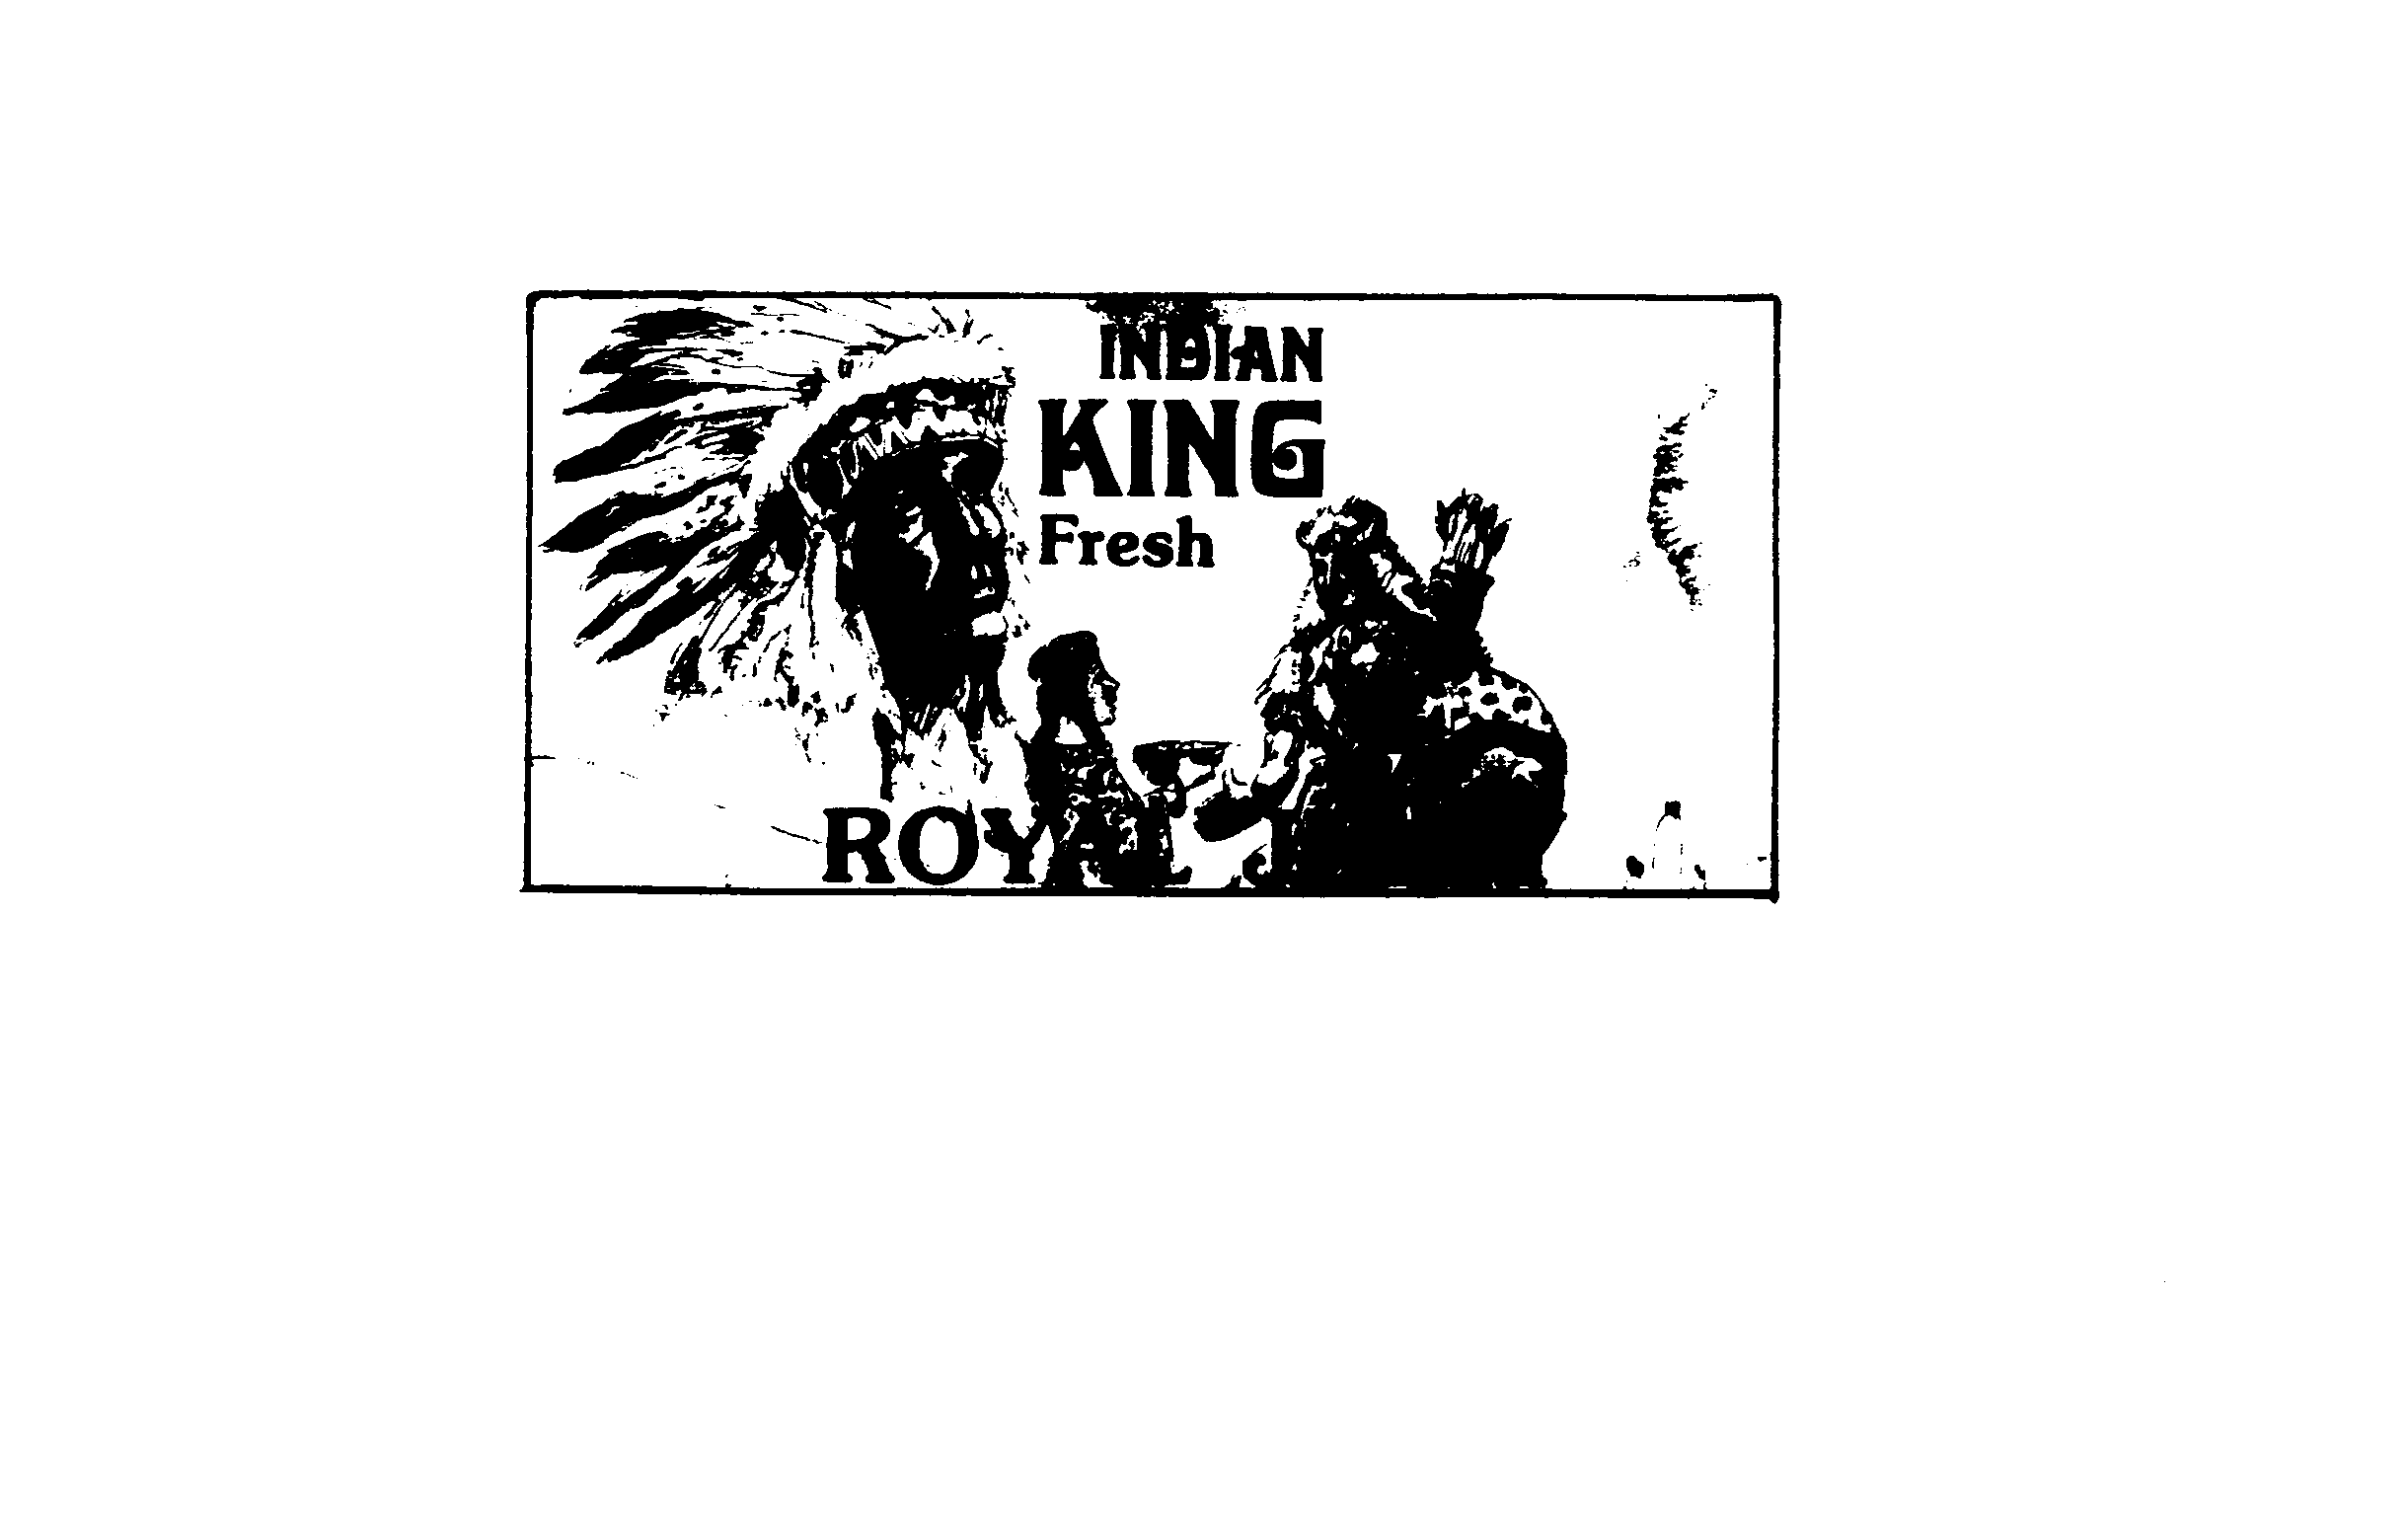  INDIAN KING FRESH ROYAL JELLY